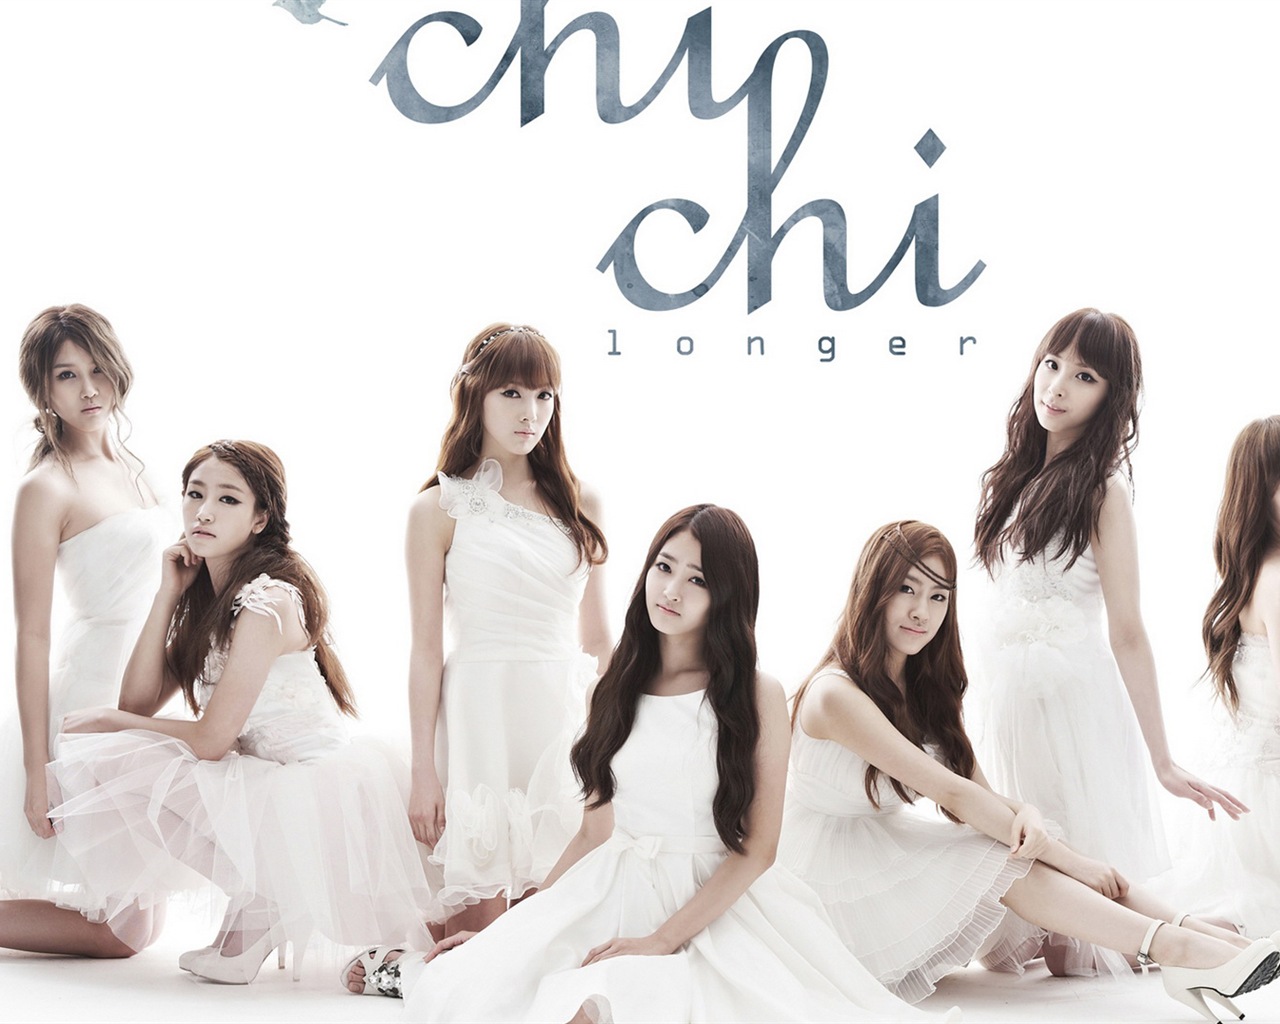 CHI CHI música coreana girl group HD Wallpapers #1 - 1280x1024